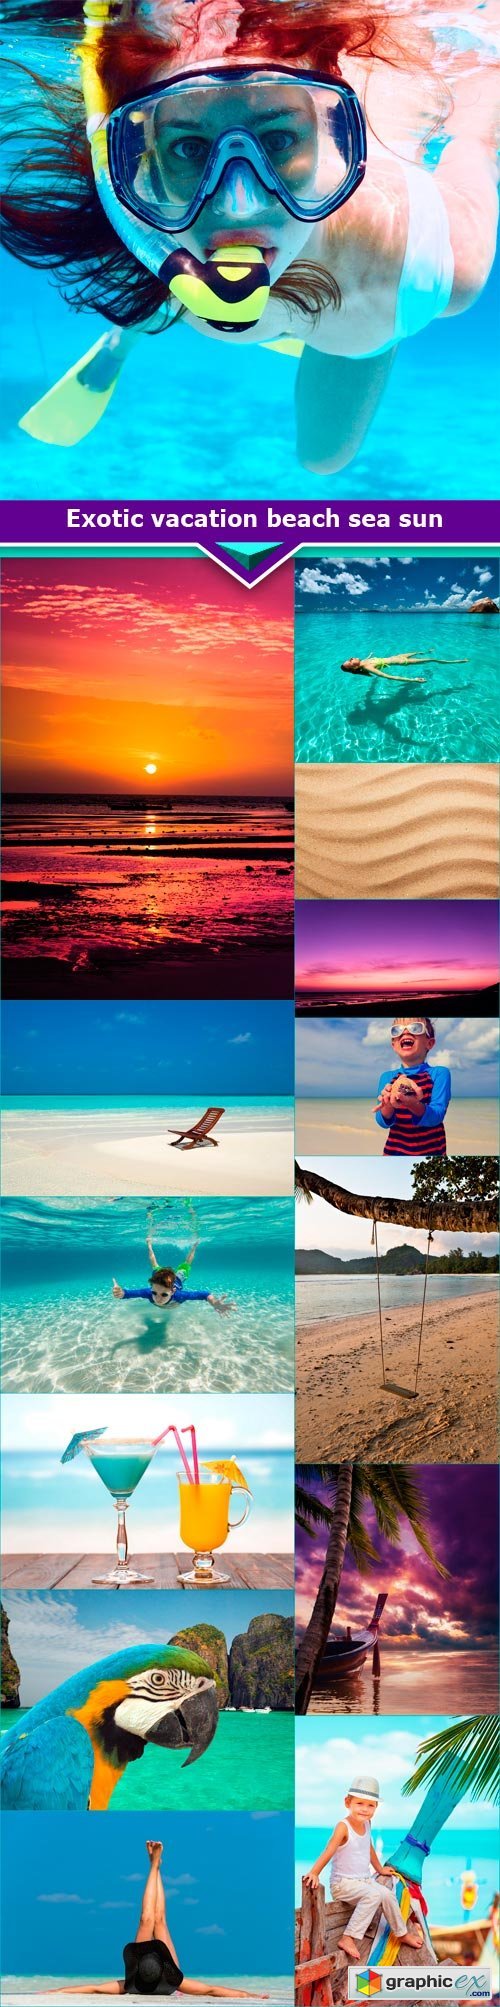 Exotic vacation beach sea sun 14x JPEG